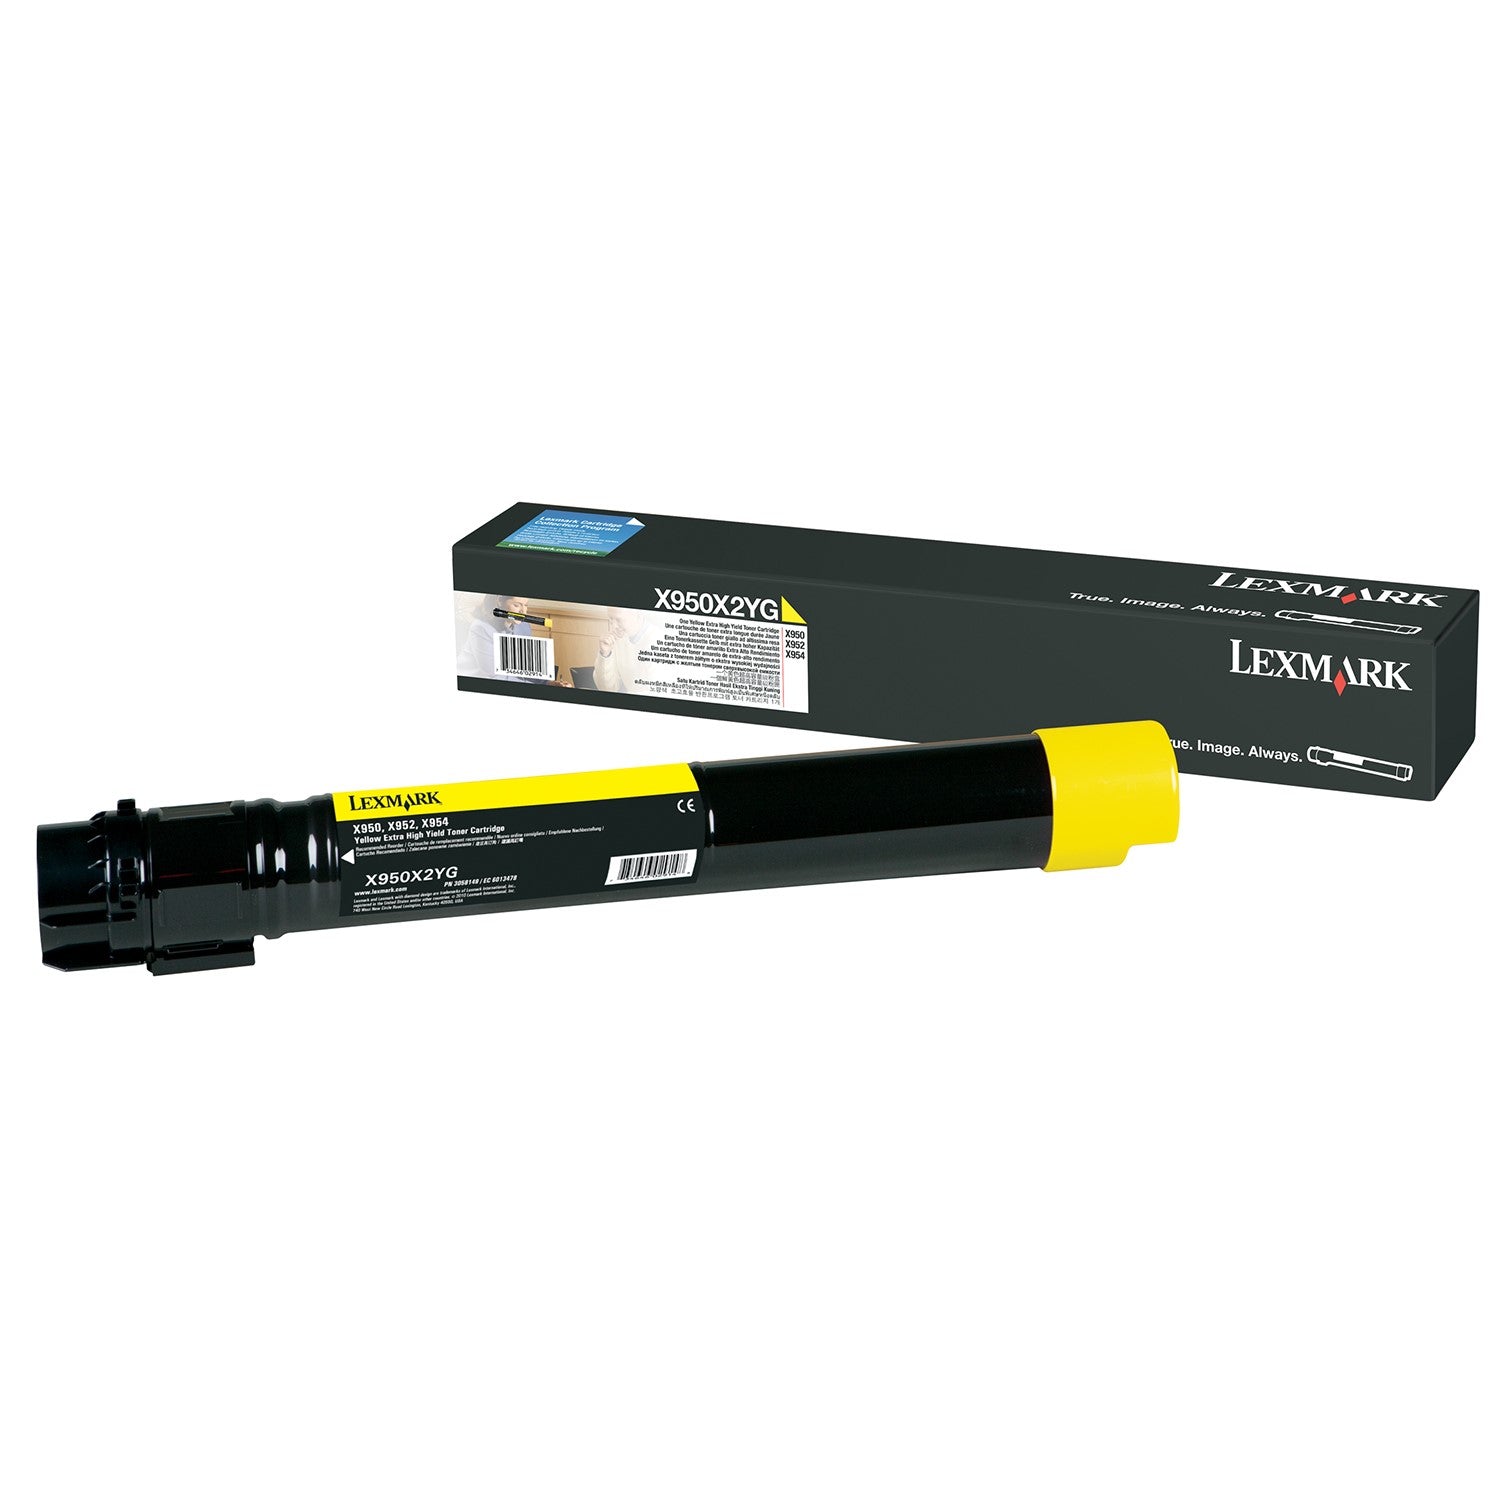 Lexmark Genuine OEM X950X2YG Yellow Extra High Yield Toner Cartridge, Estimated Yield 22,000